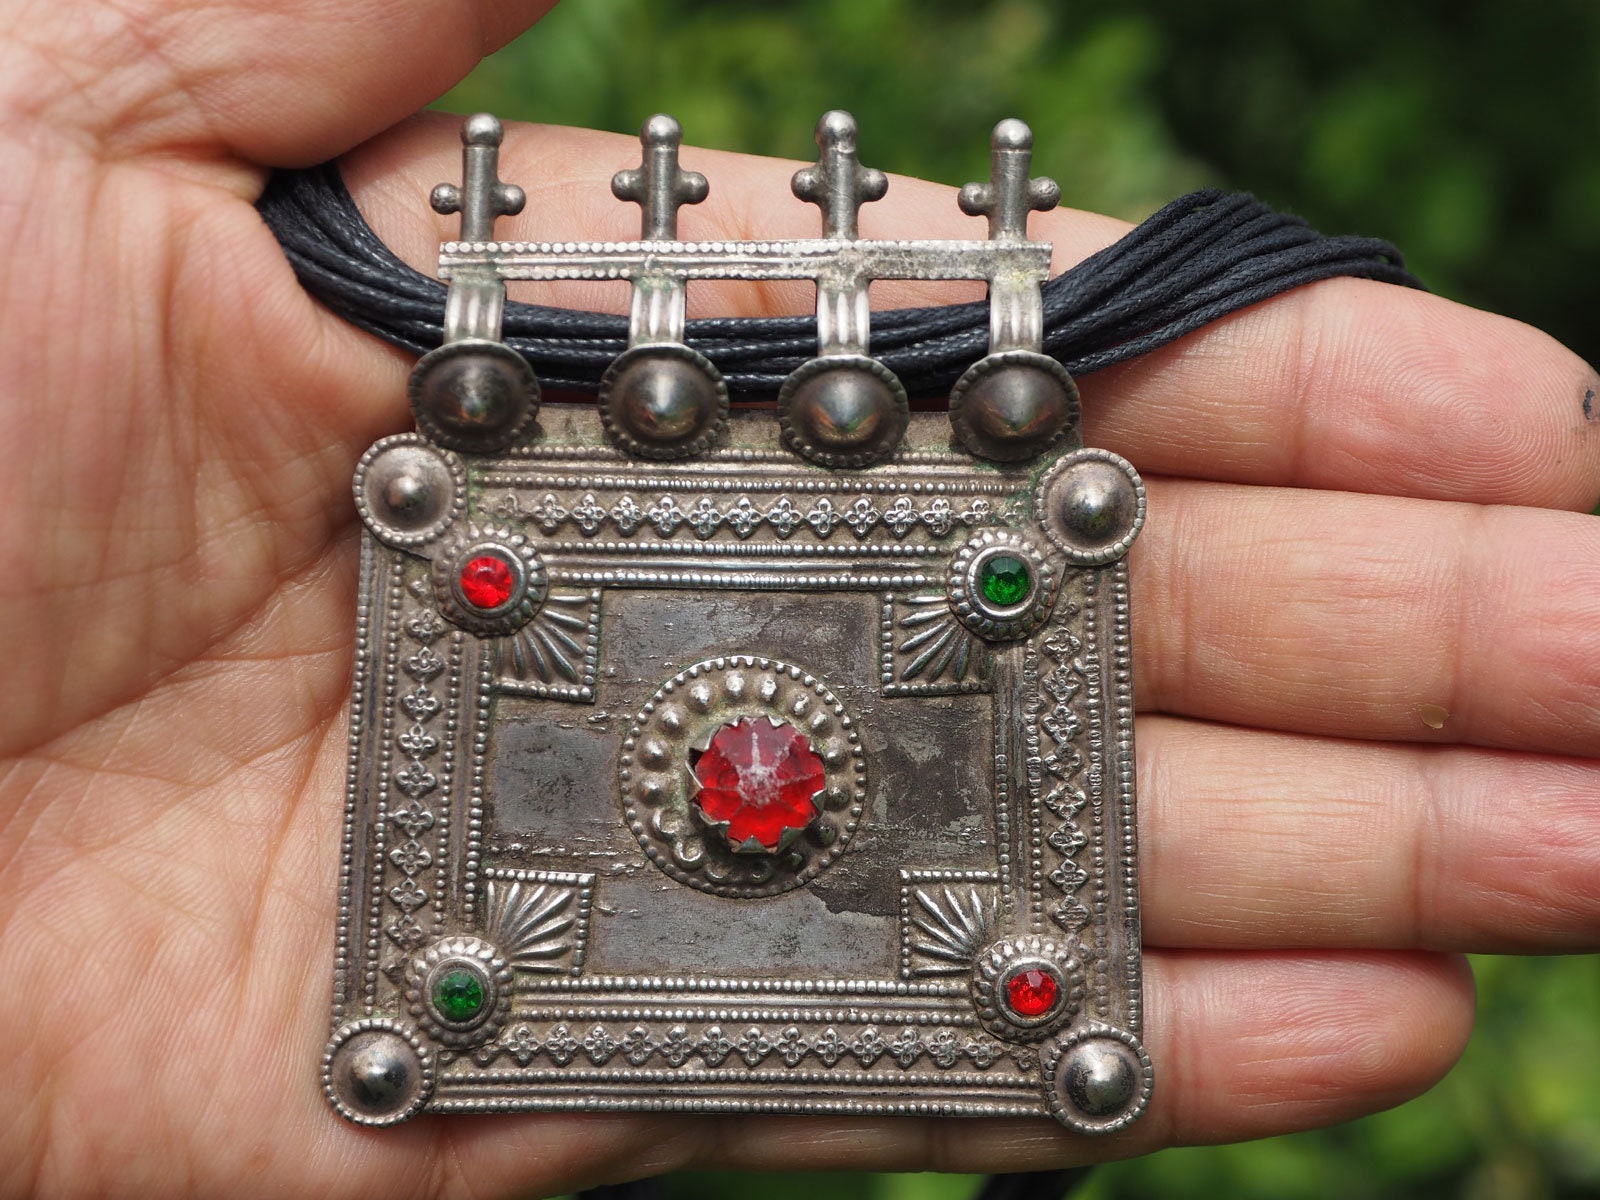 Antique very long nomad silver necklace pendant tassel Nuristan